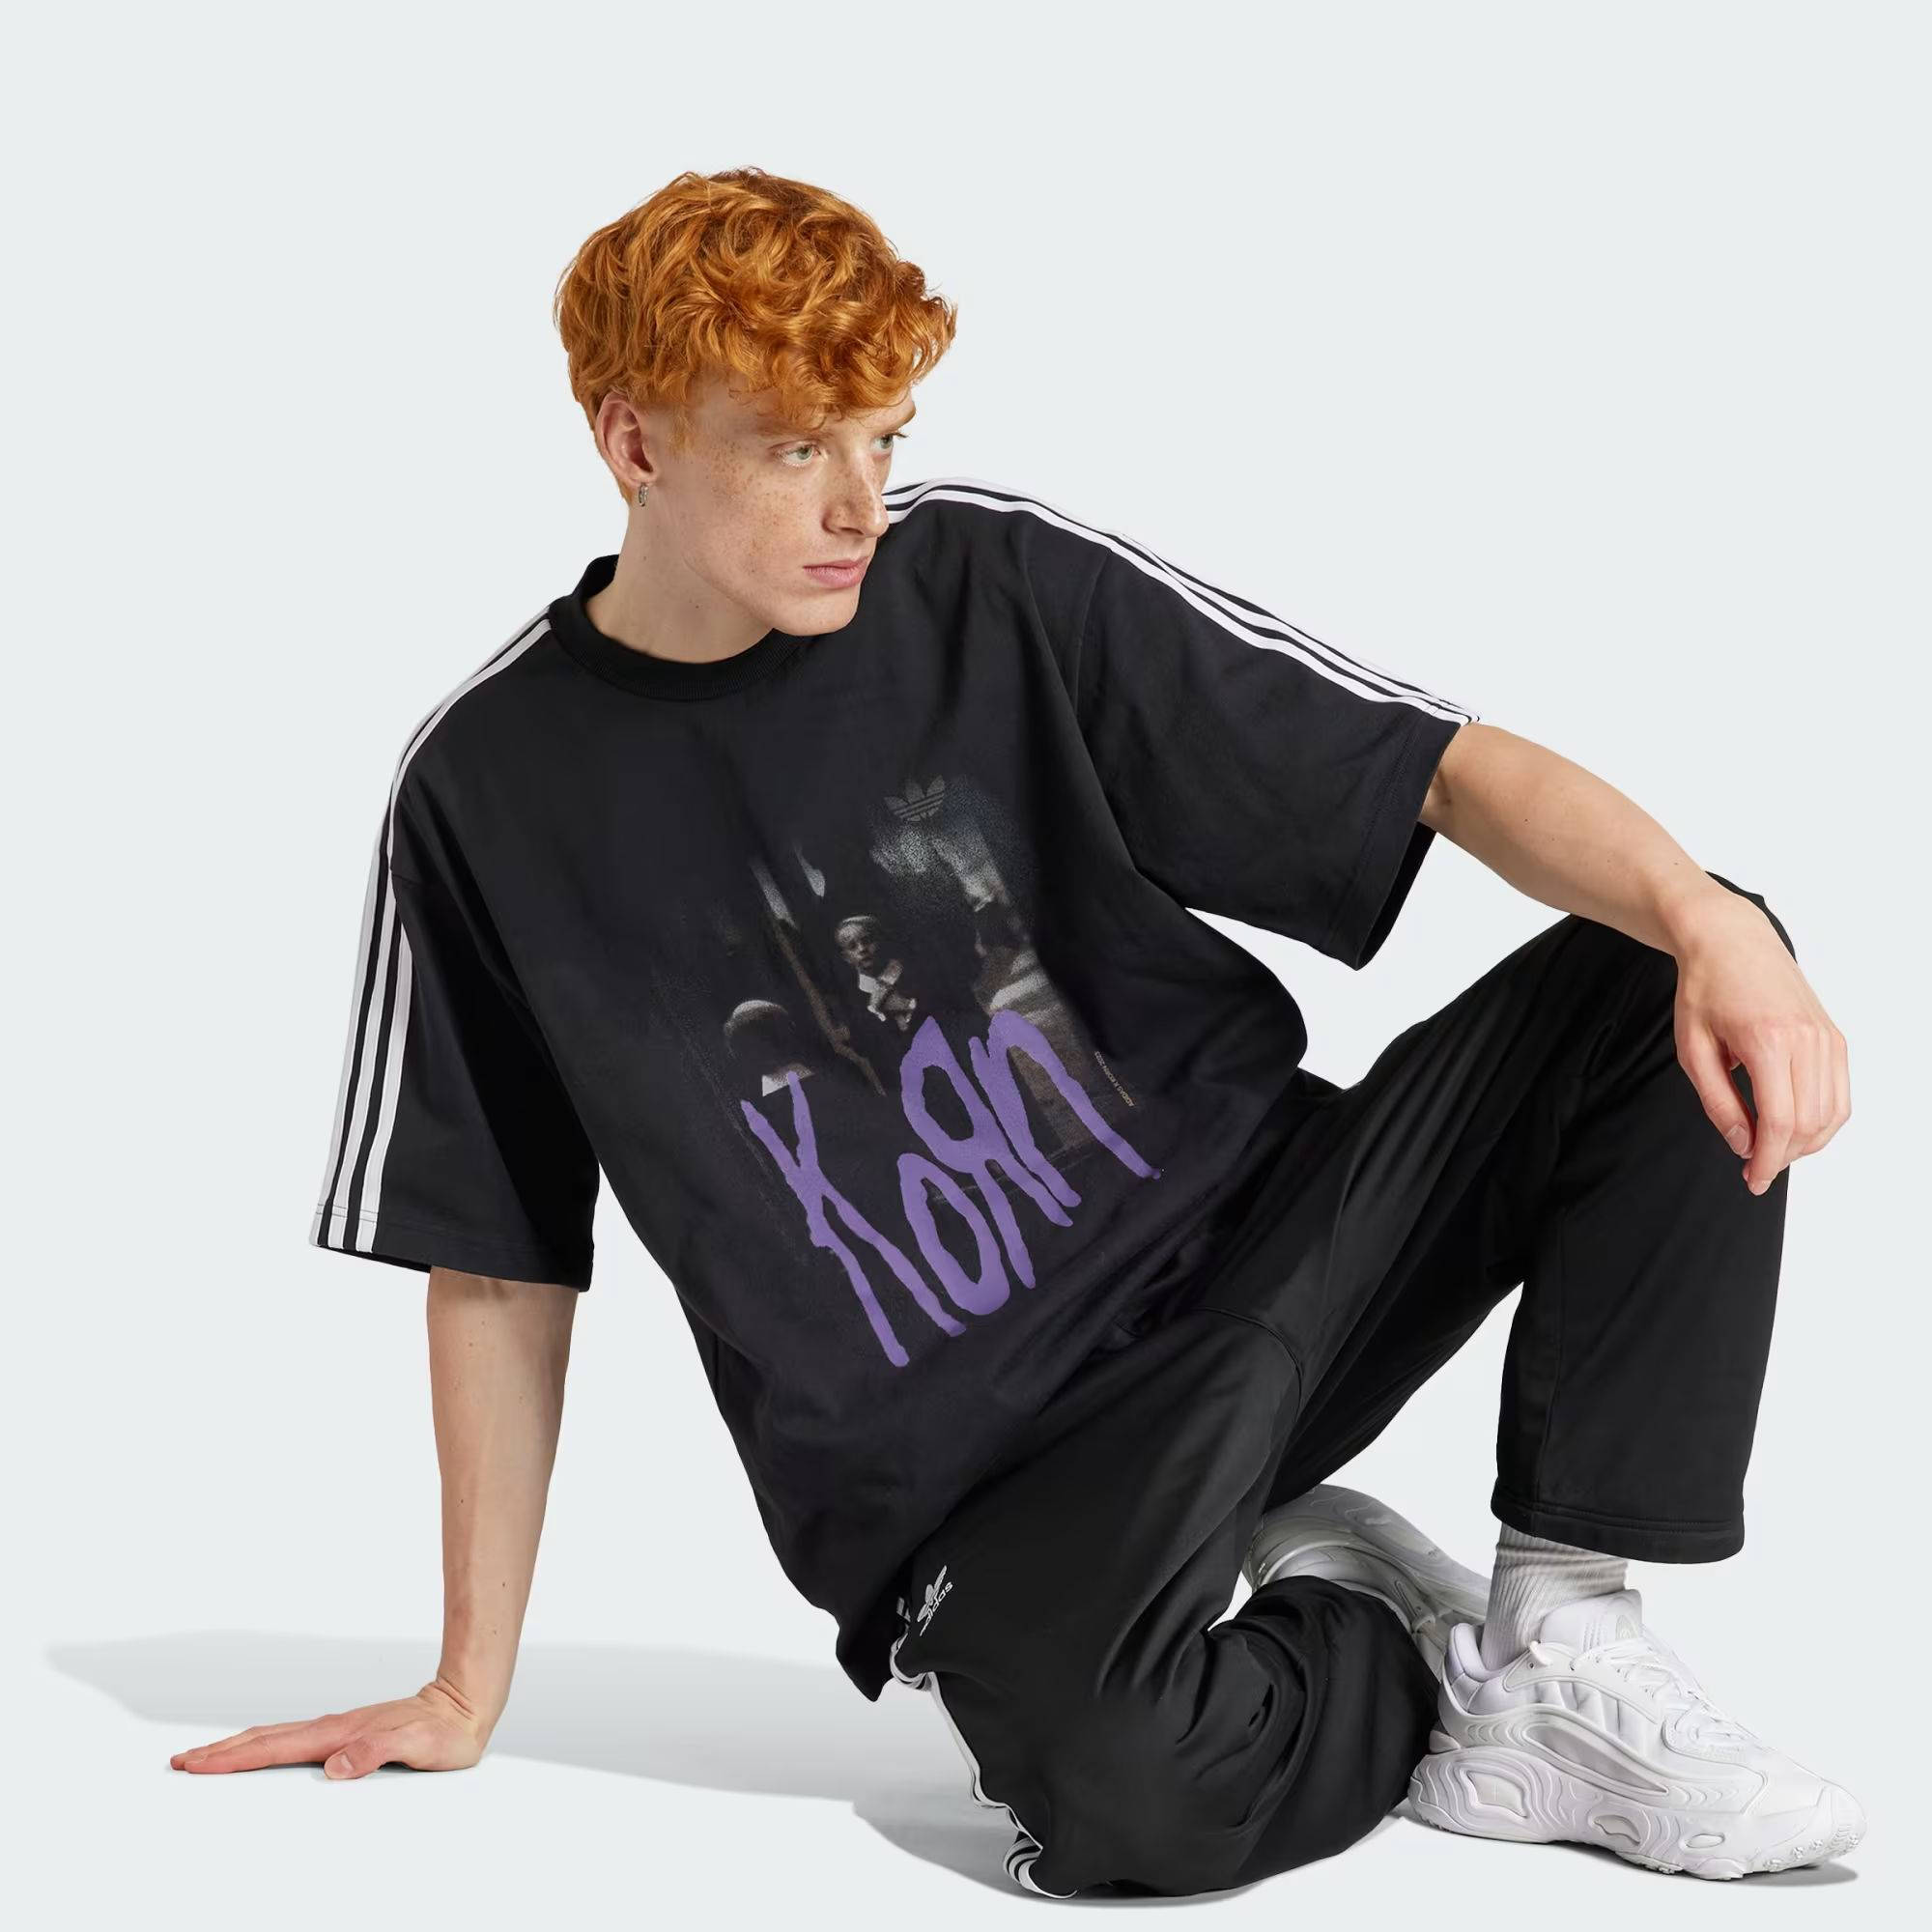 Korn x adidas Graphic T-Shirt